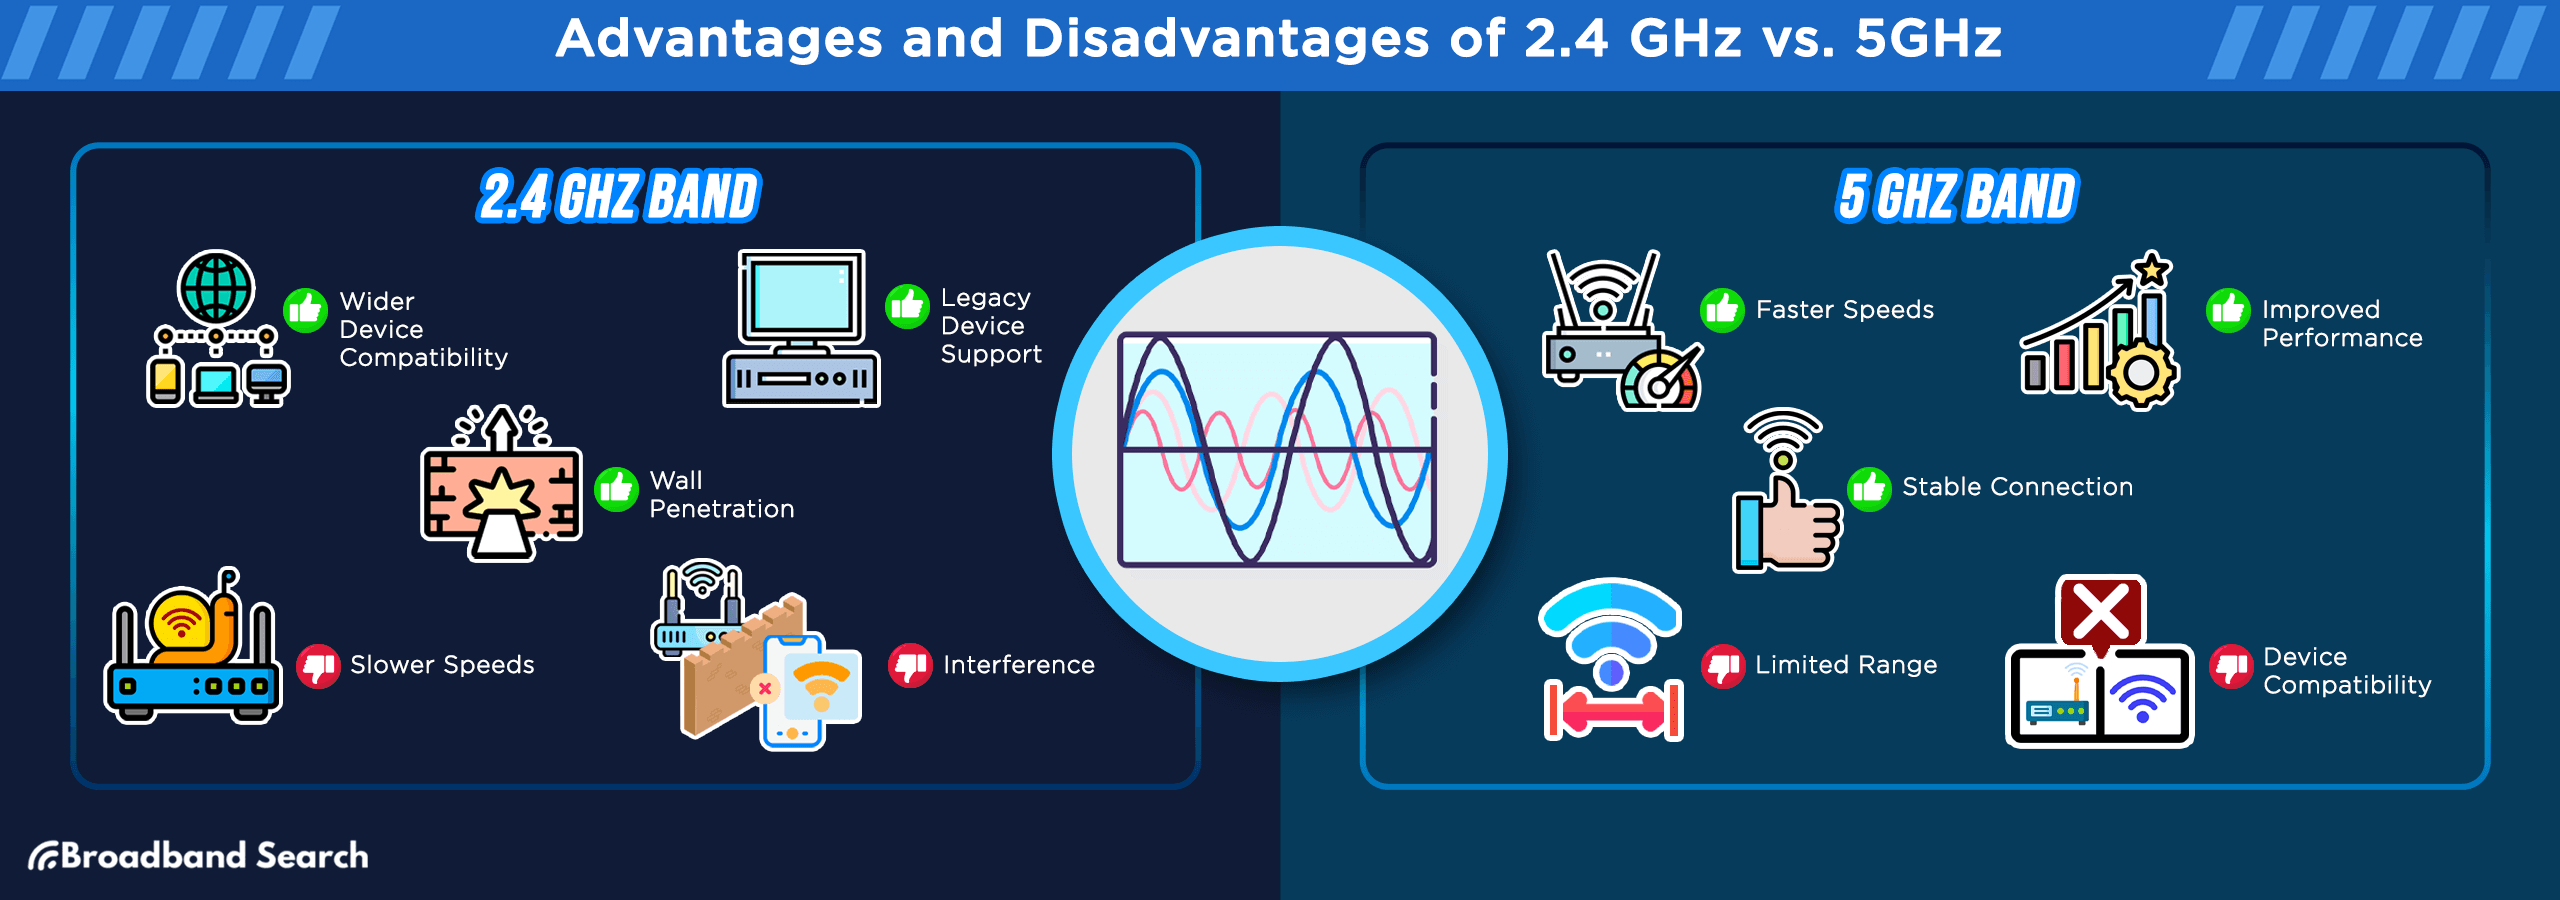 Advantages and disadvantages of 2.4 ghz vs 5ghz